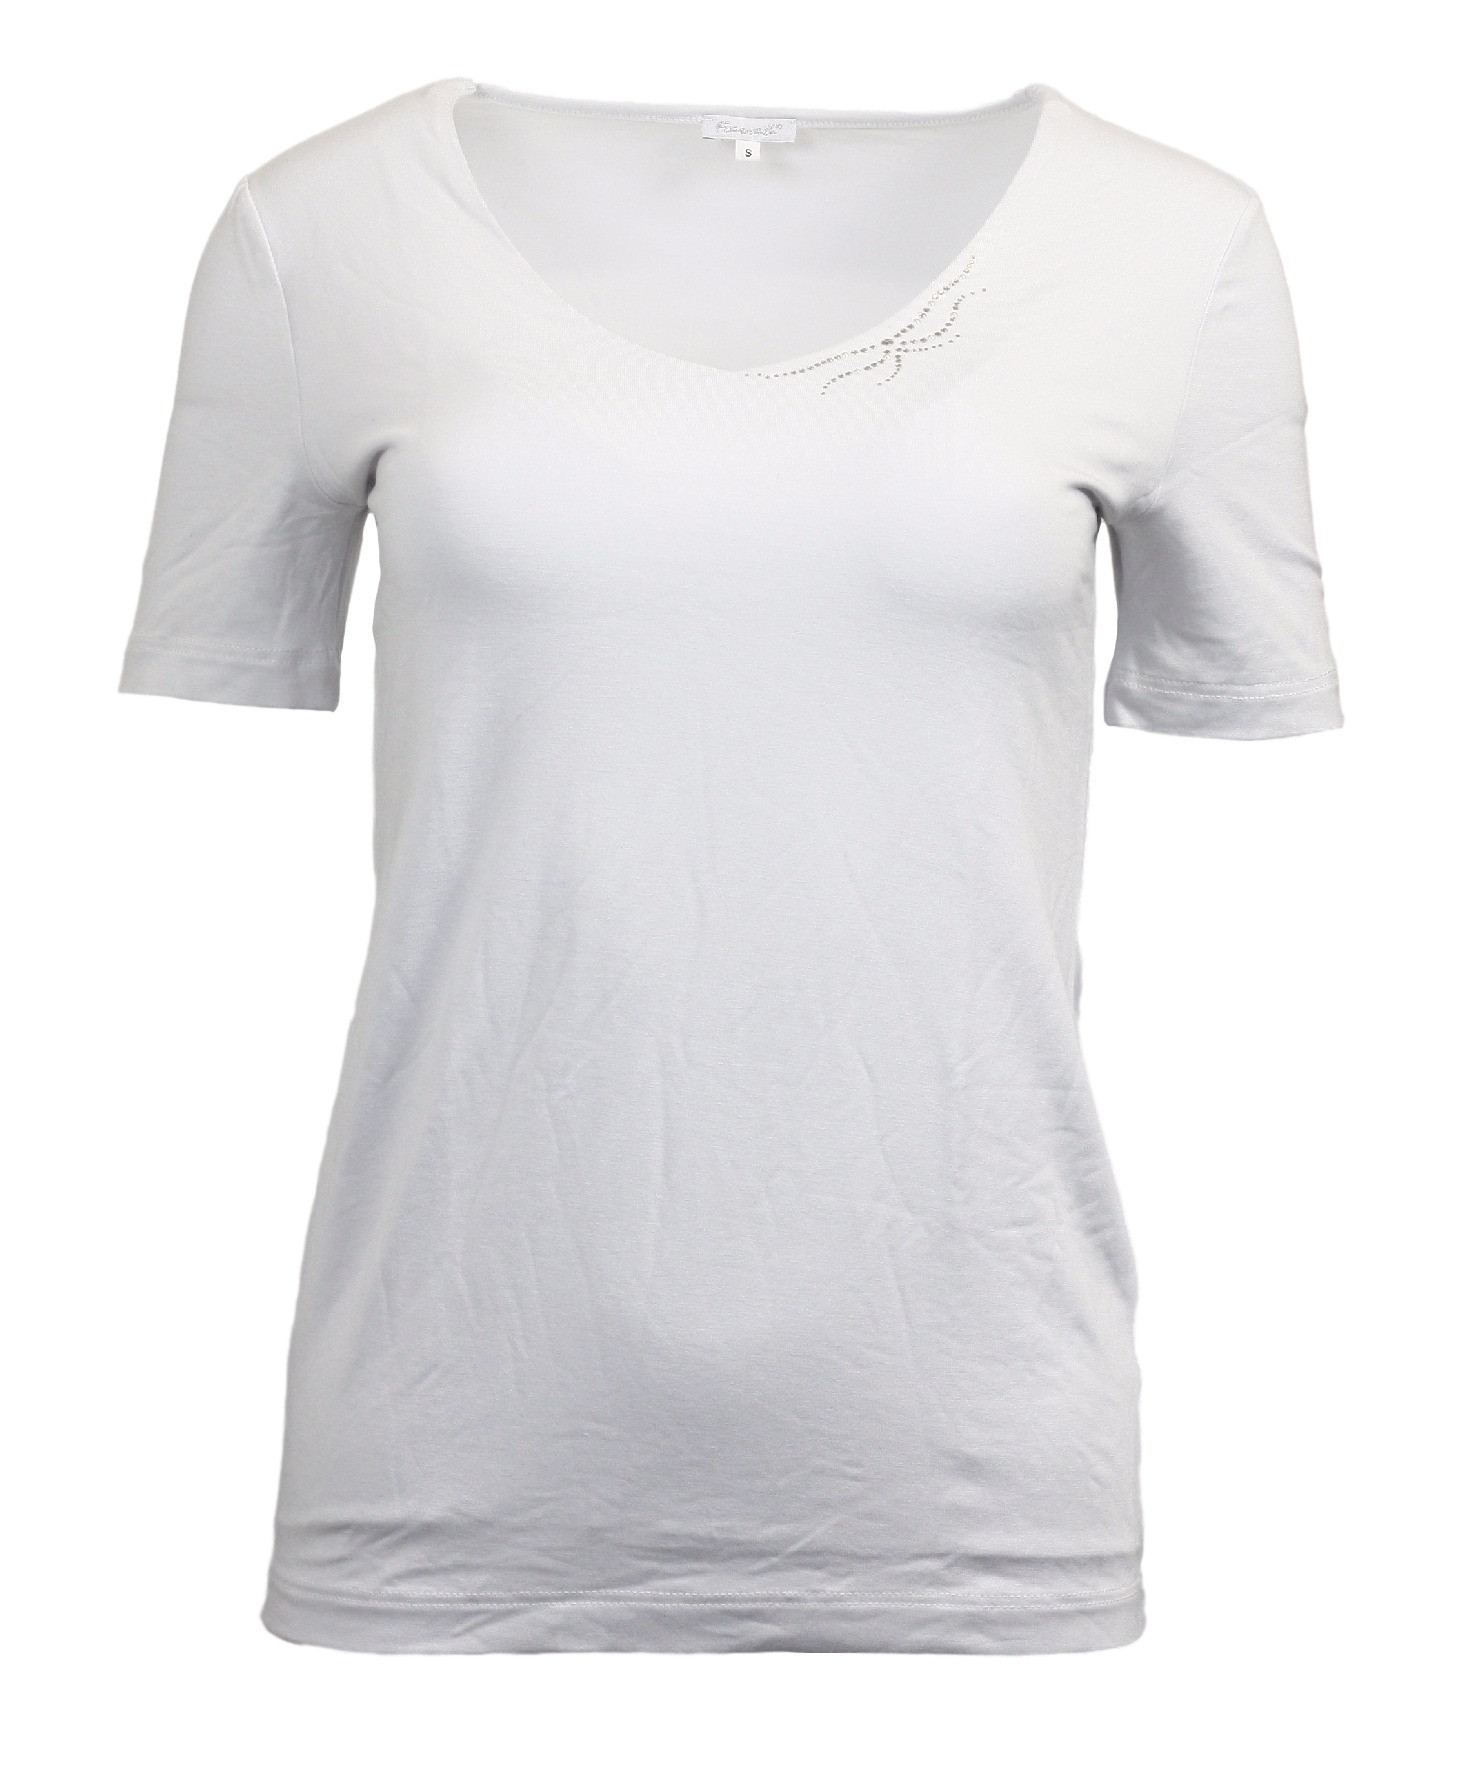 Dámské tričko Linaka kr - Favab bílá L